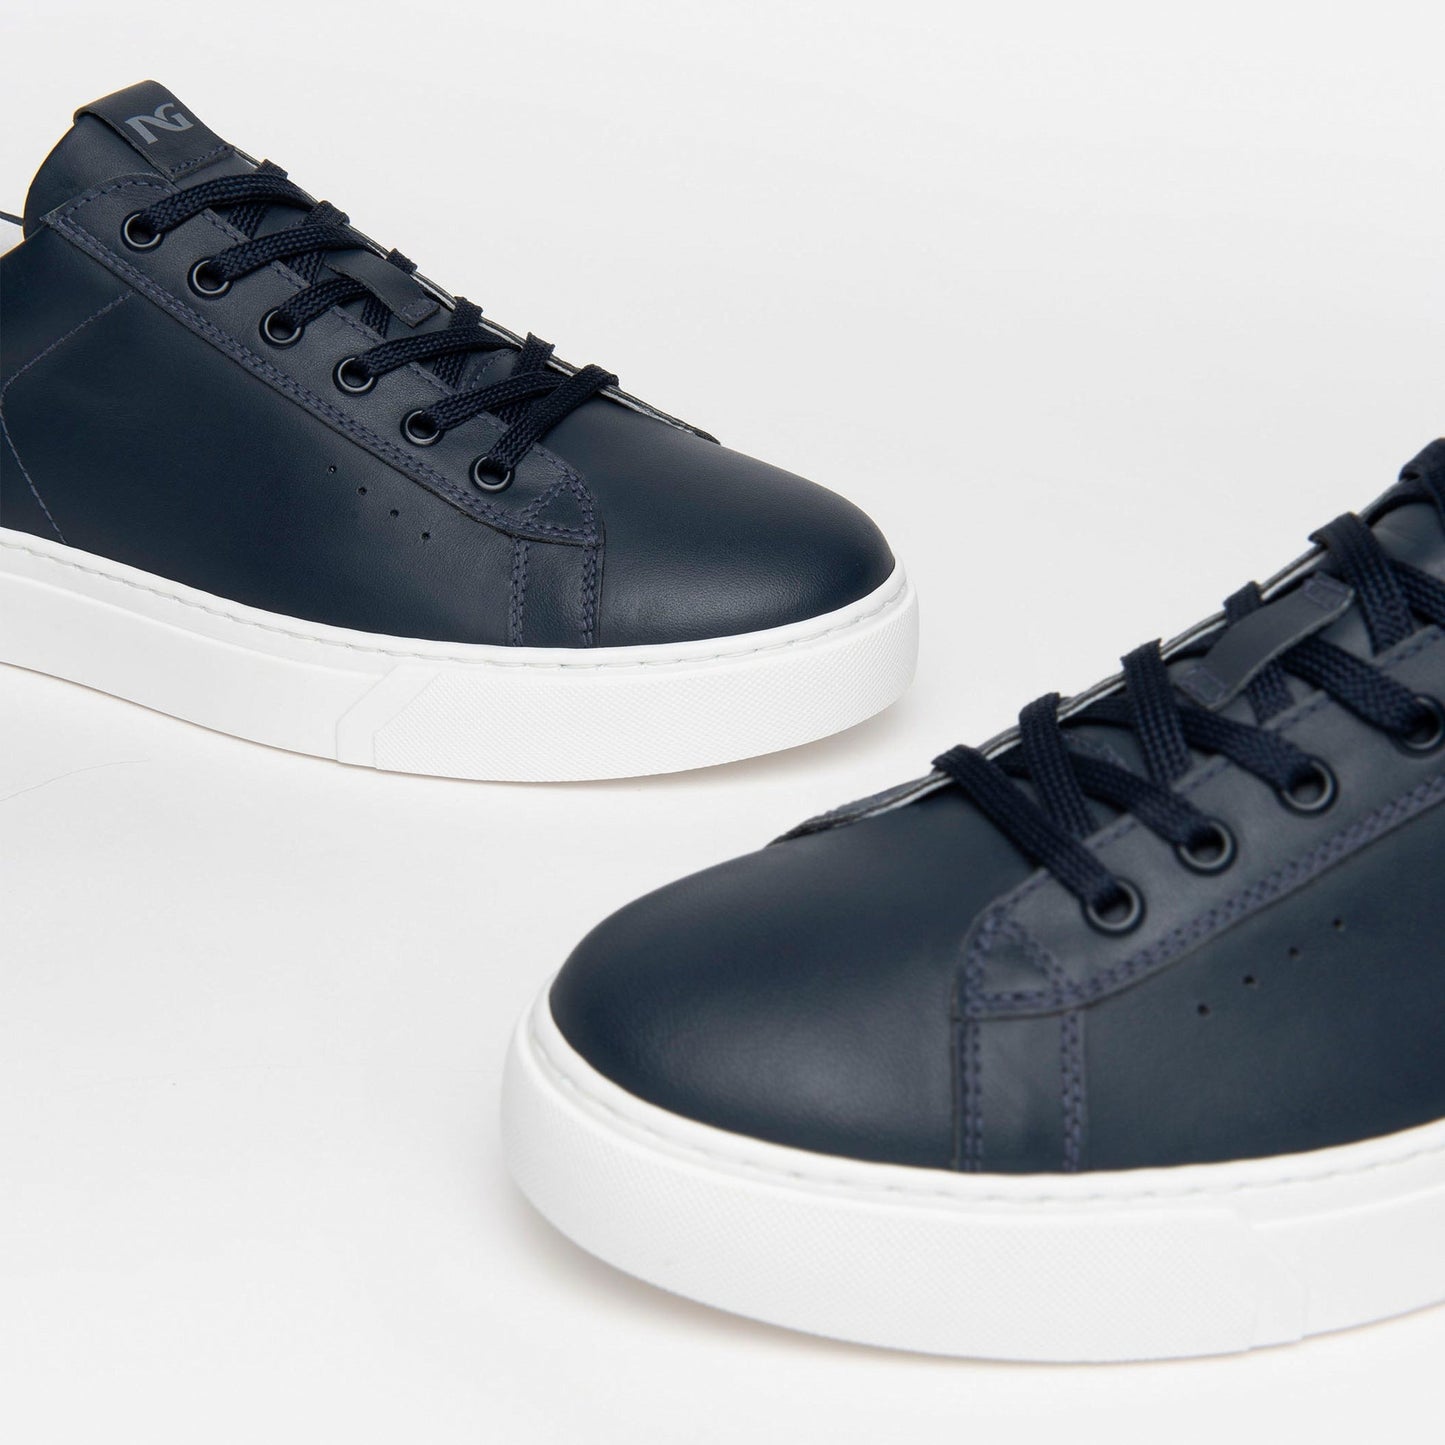 Sneakers NeroGiardini man blue leather